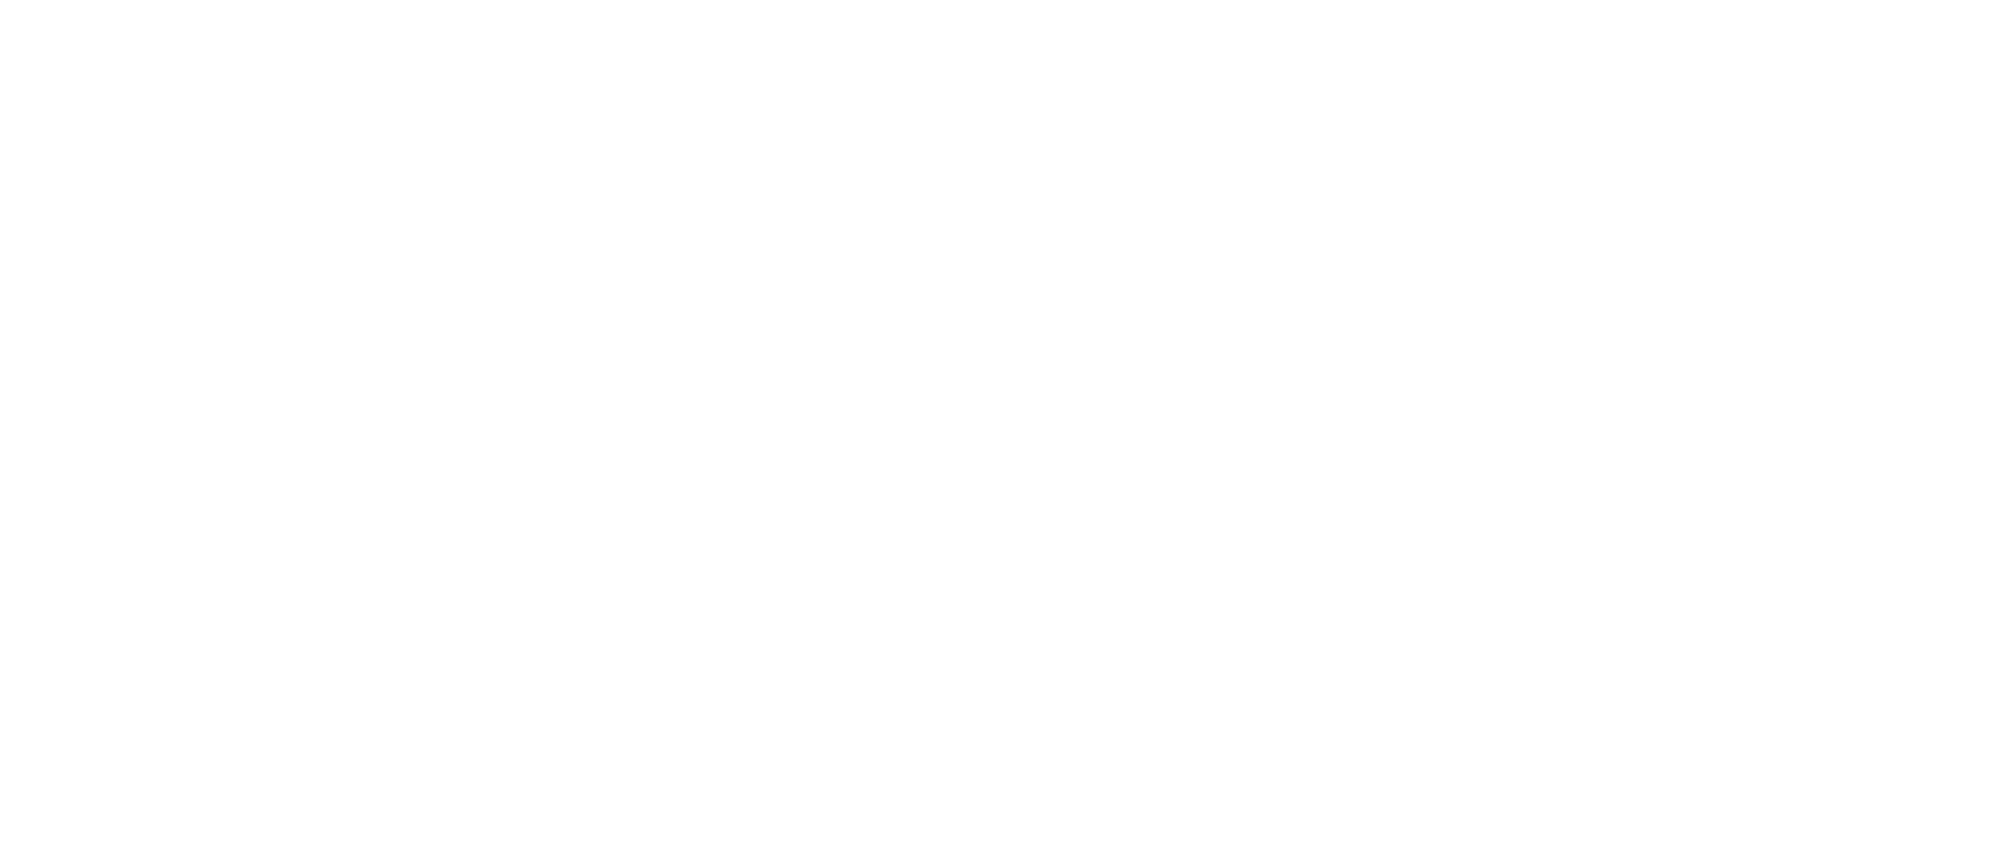 Kris Barras Band